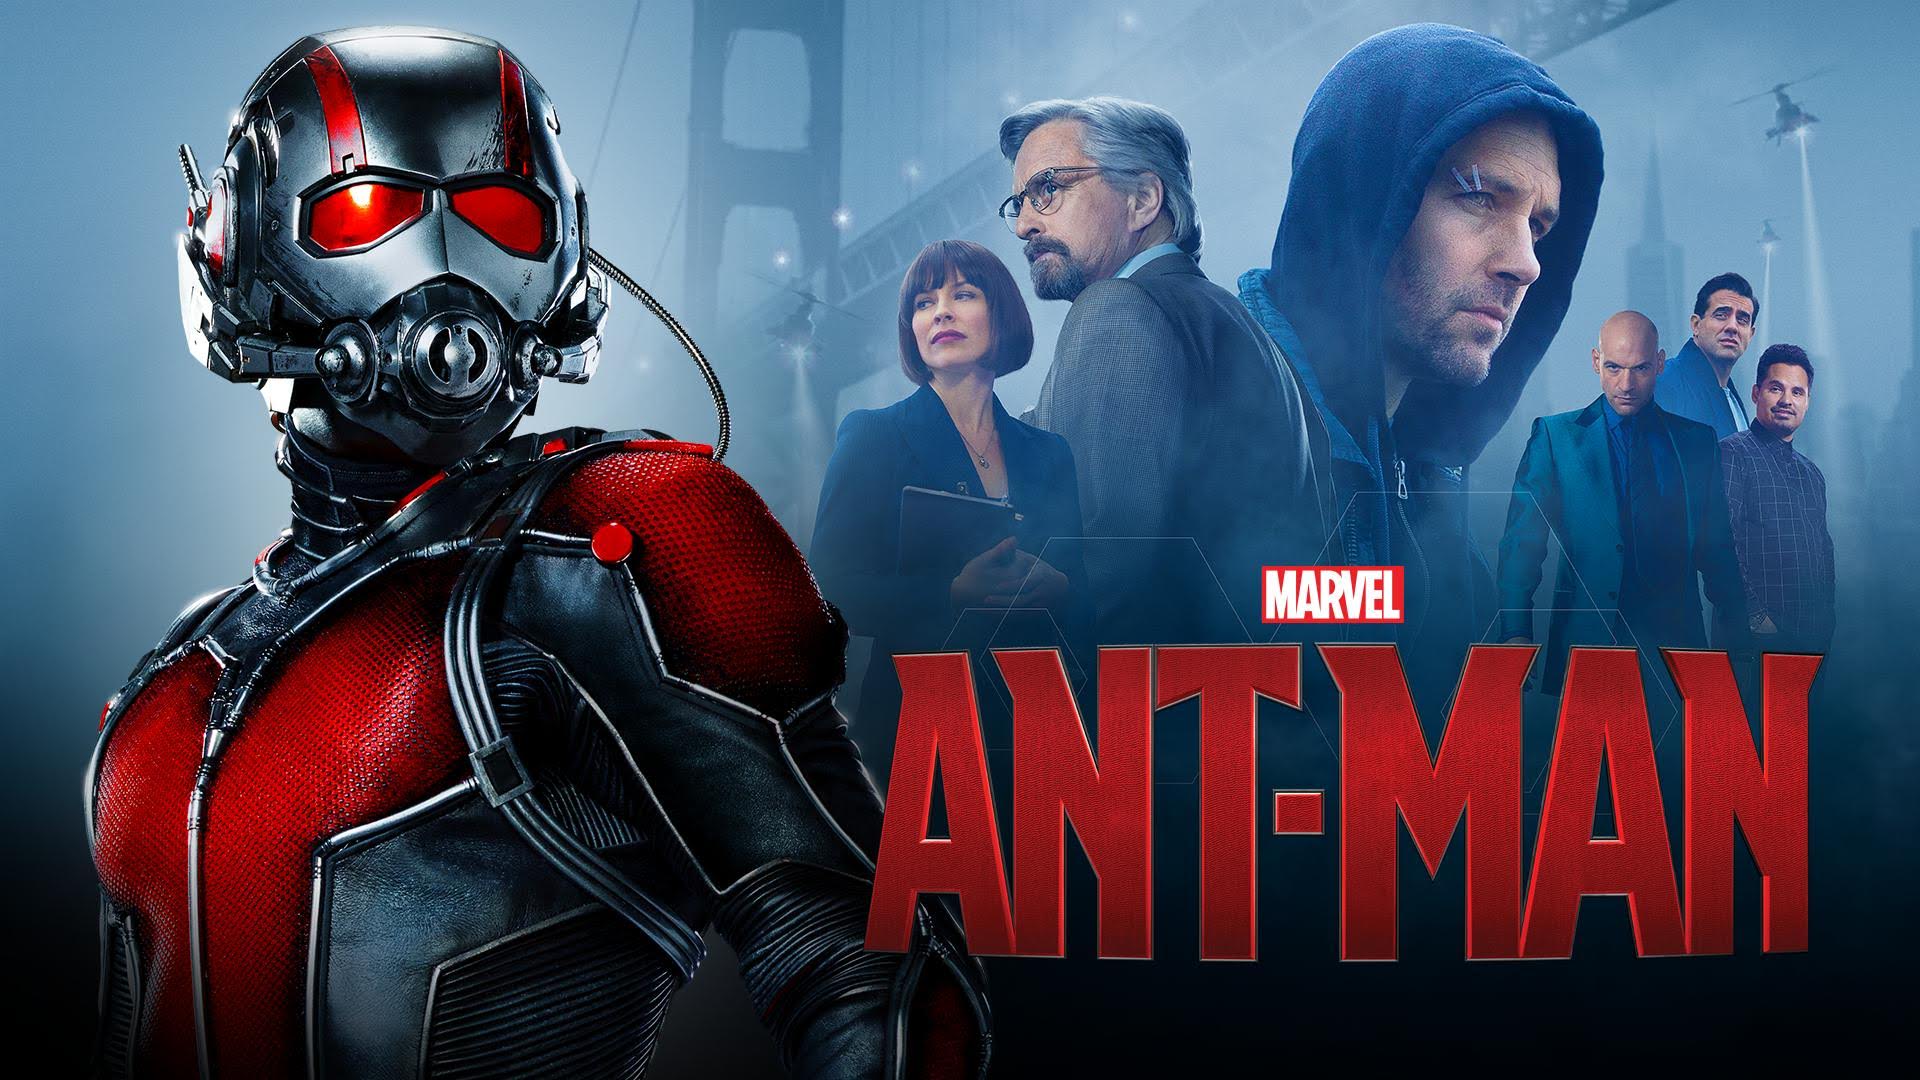 Phim marvel Ant-man năm 2015